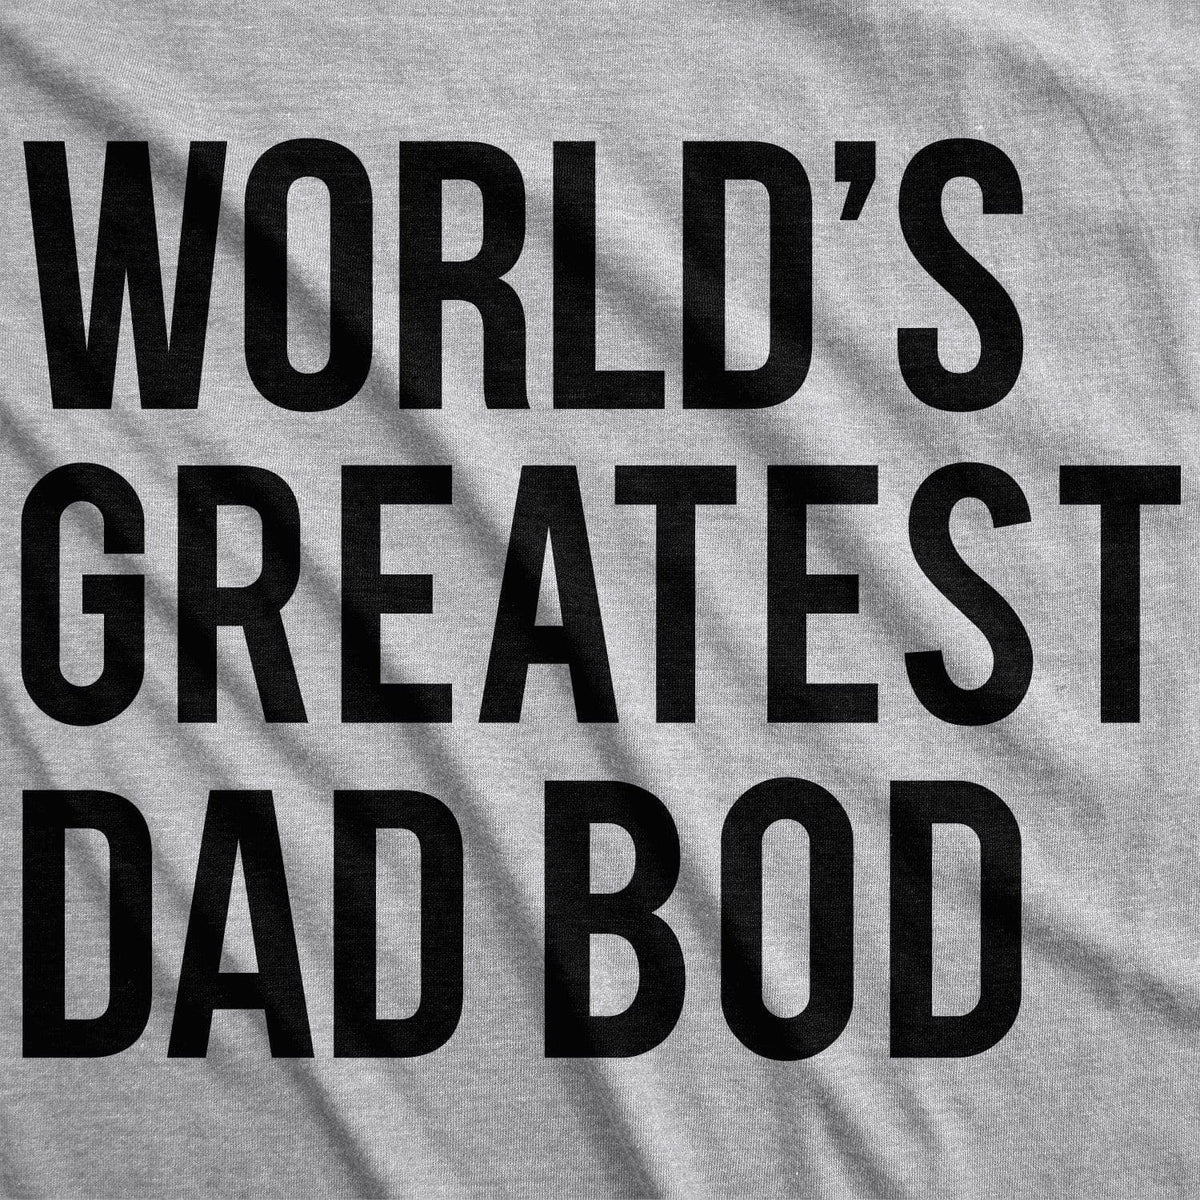 World&#39;s Greatest Dad Bod Men&#39;s Tshirt  -  Crazy Dog T-Shirts